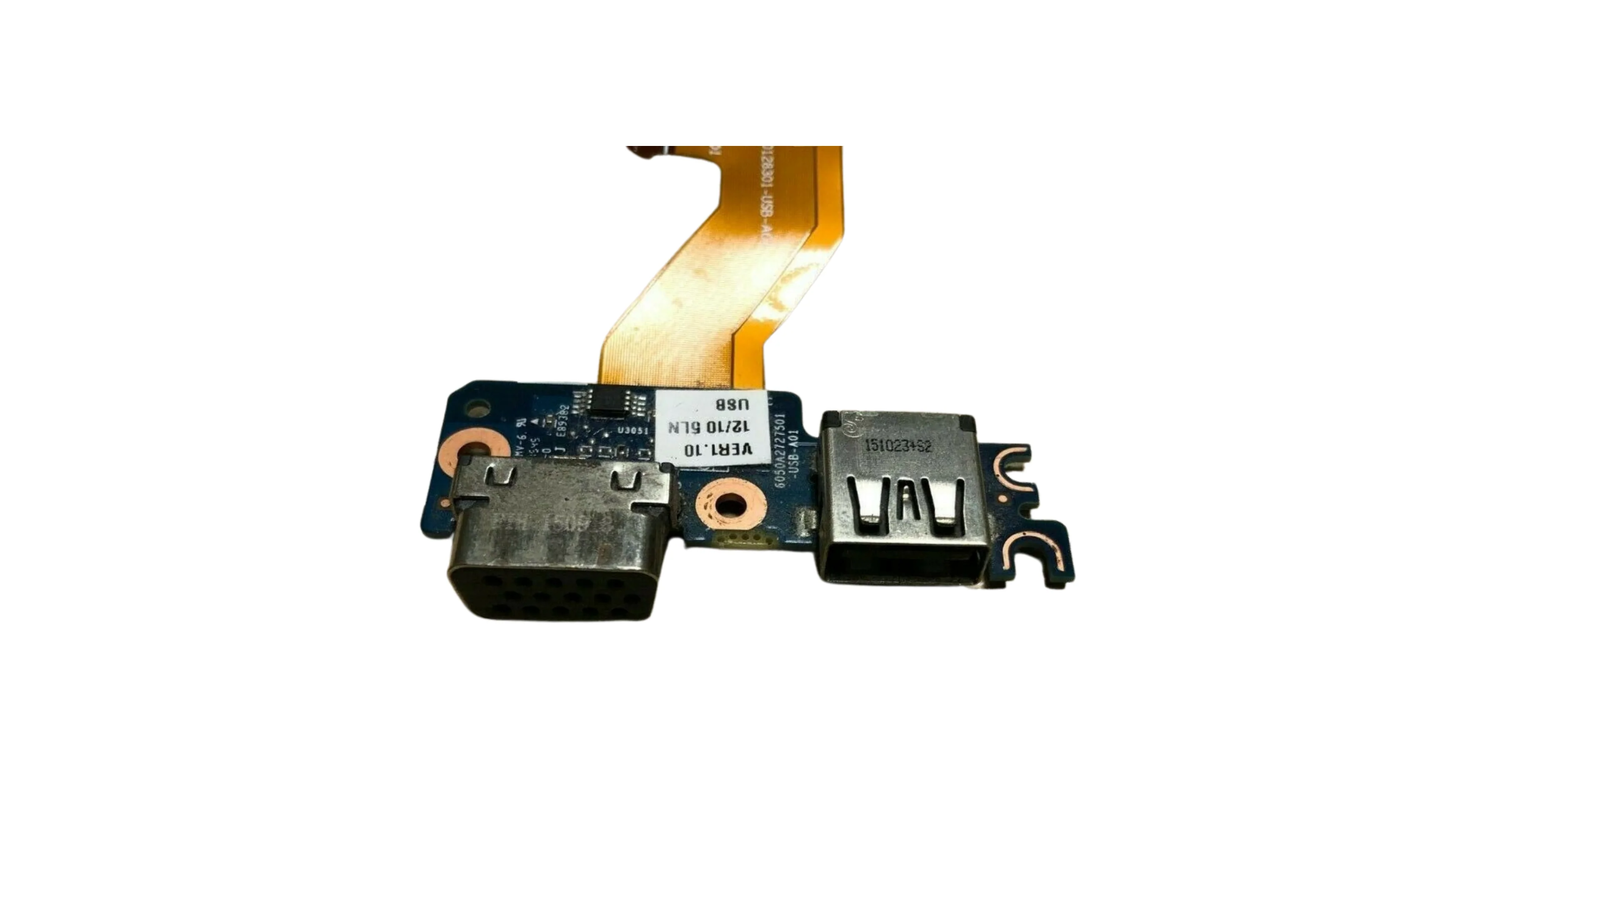 6050A2727501 USB Port VGA board from HP 840 G3